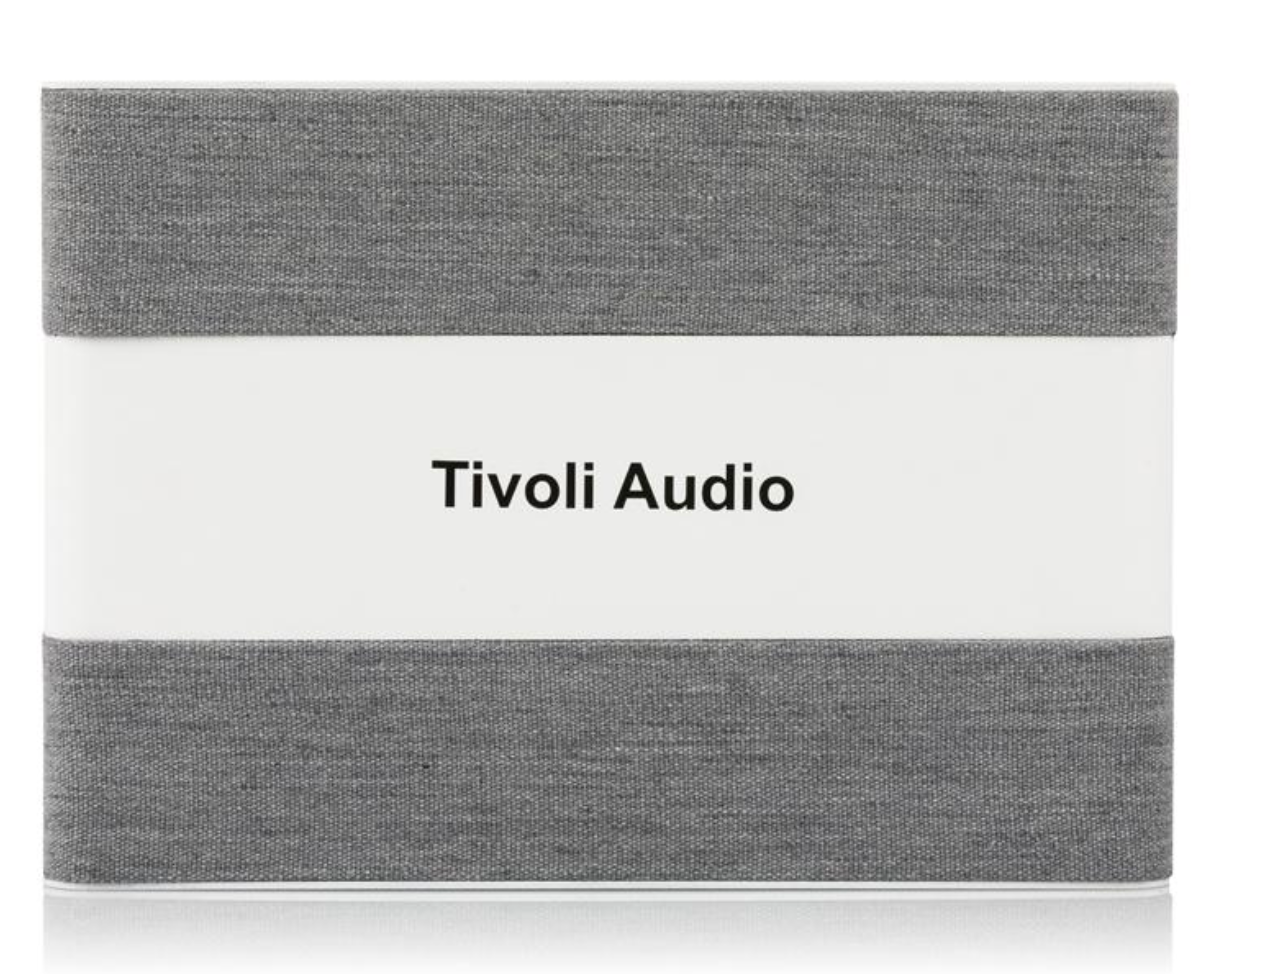 The Tivoli Audio Model Sub. White/Grey top image